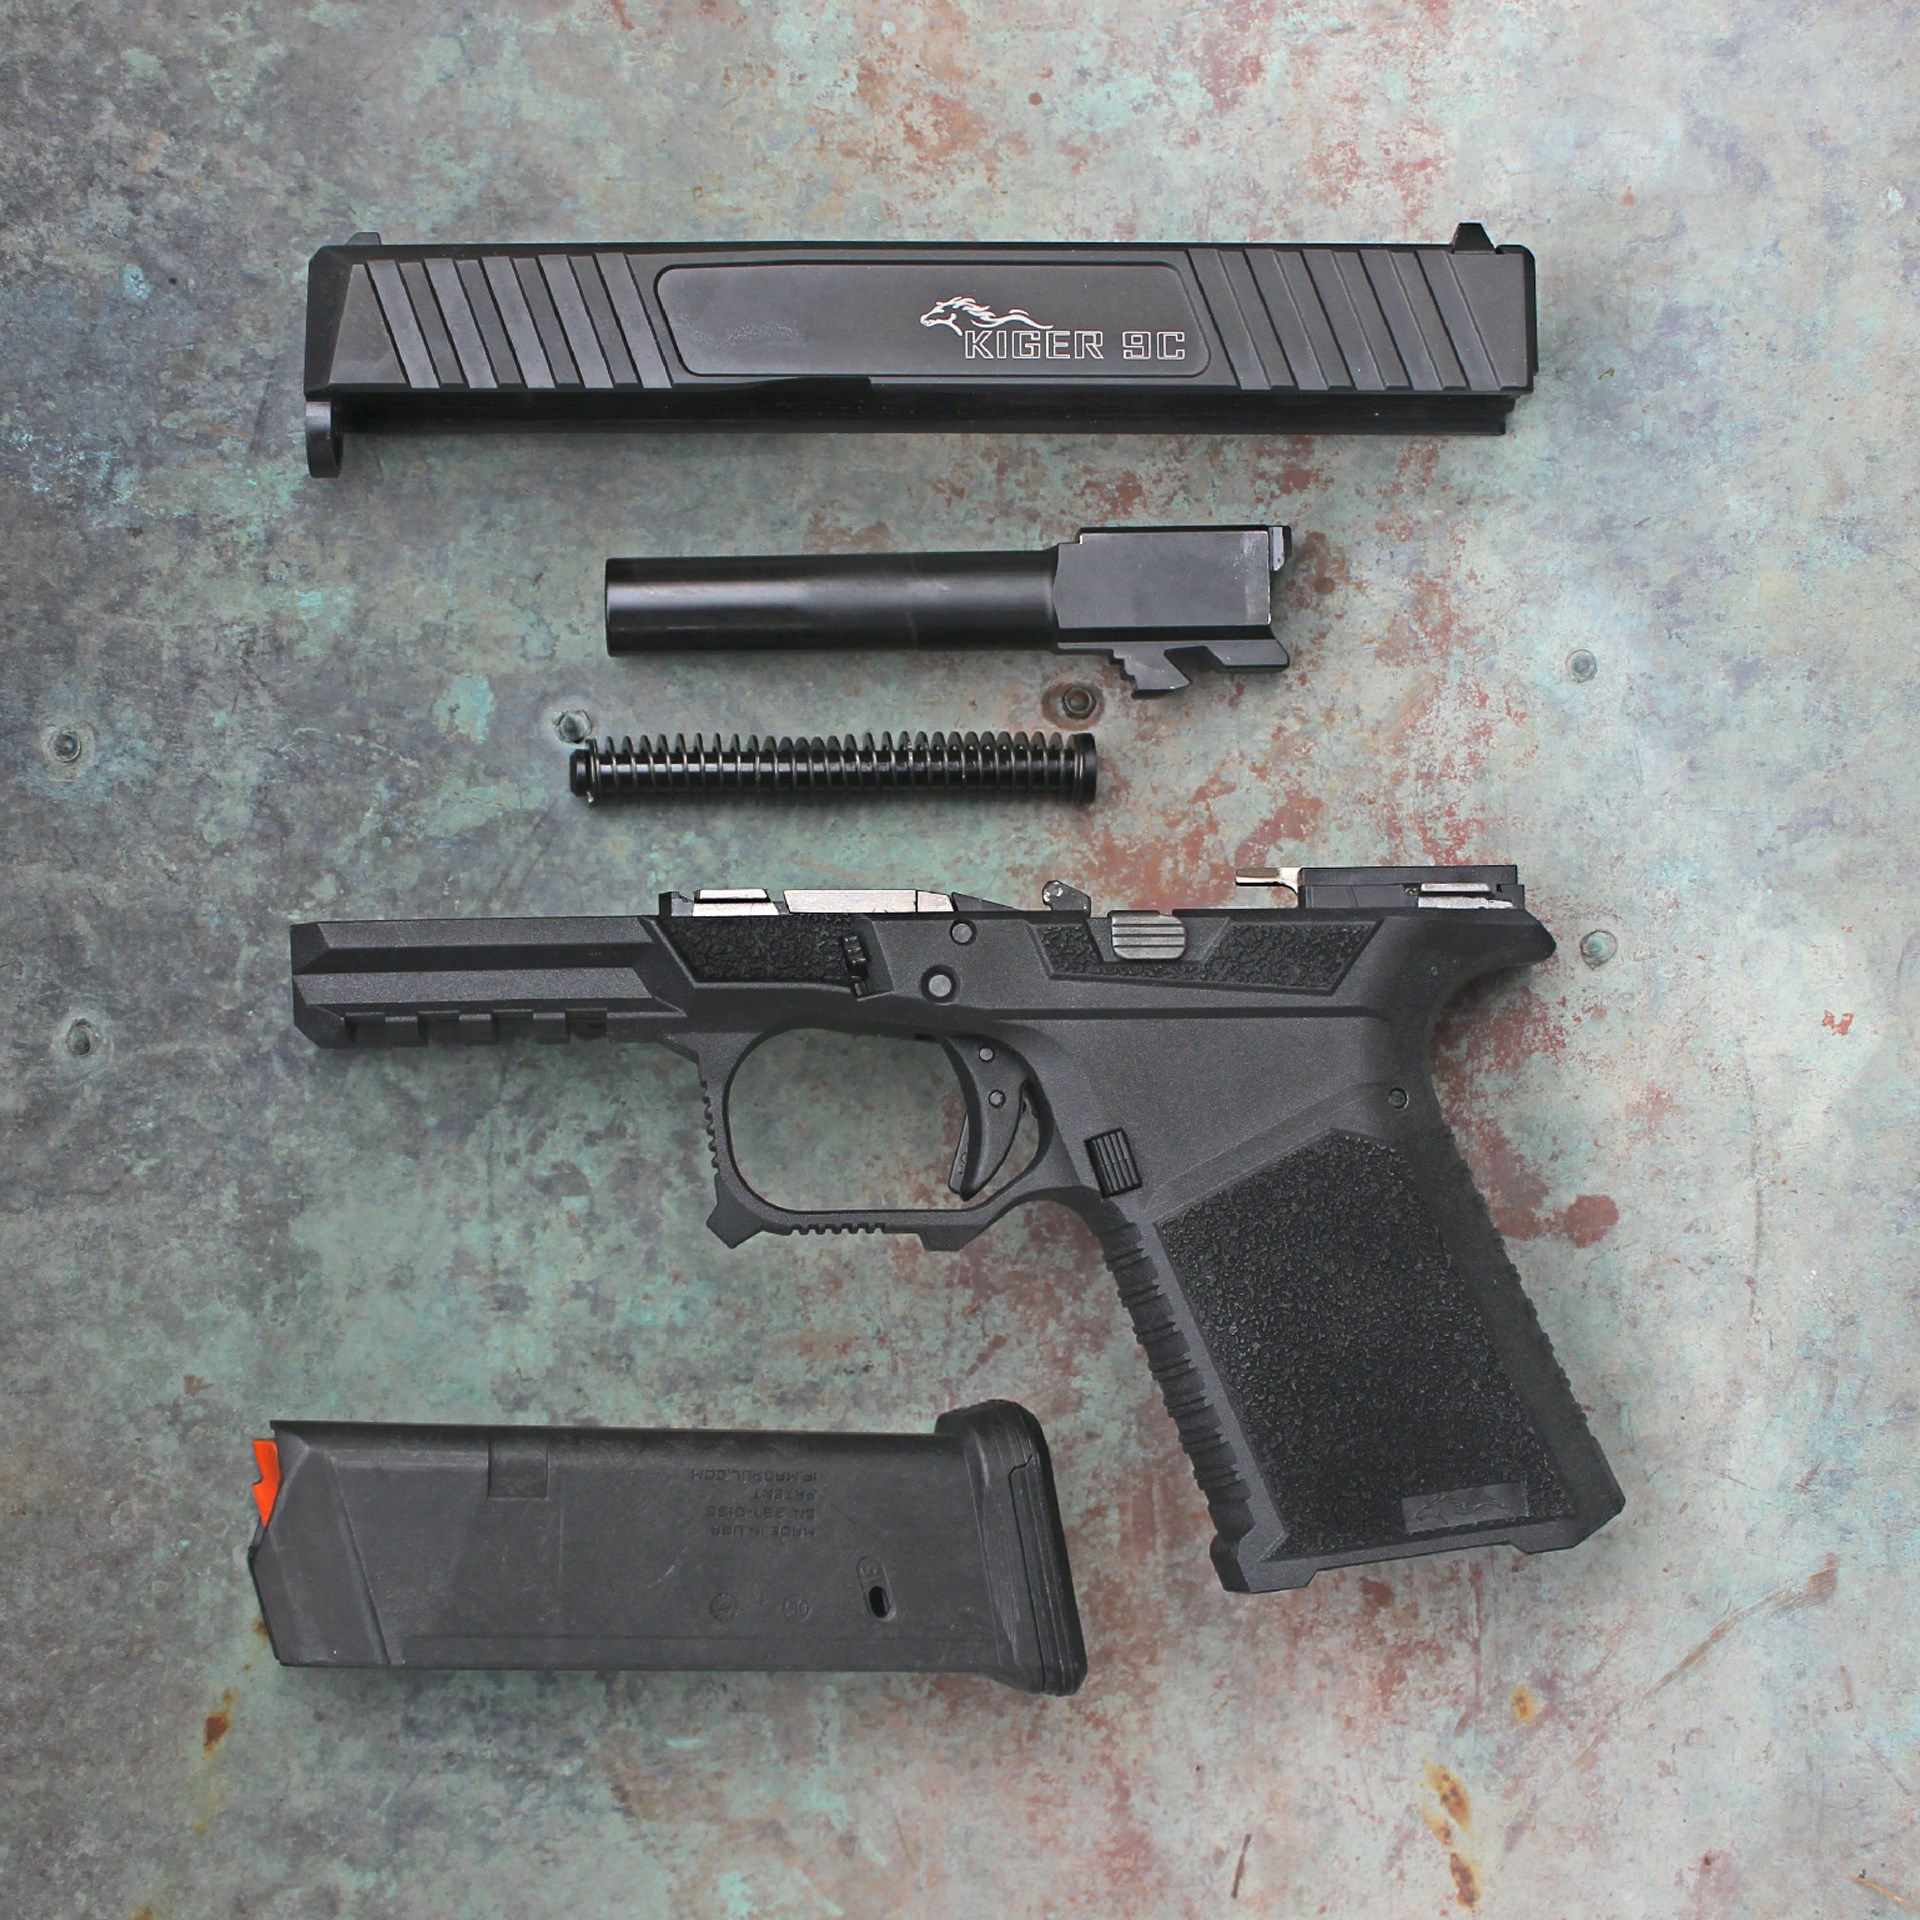 Kiger 9c 9mm pistol disassembled view arrangement of gun parts handgun metal plastic barrel spring slide magazine frame weathered-steel background